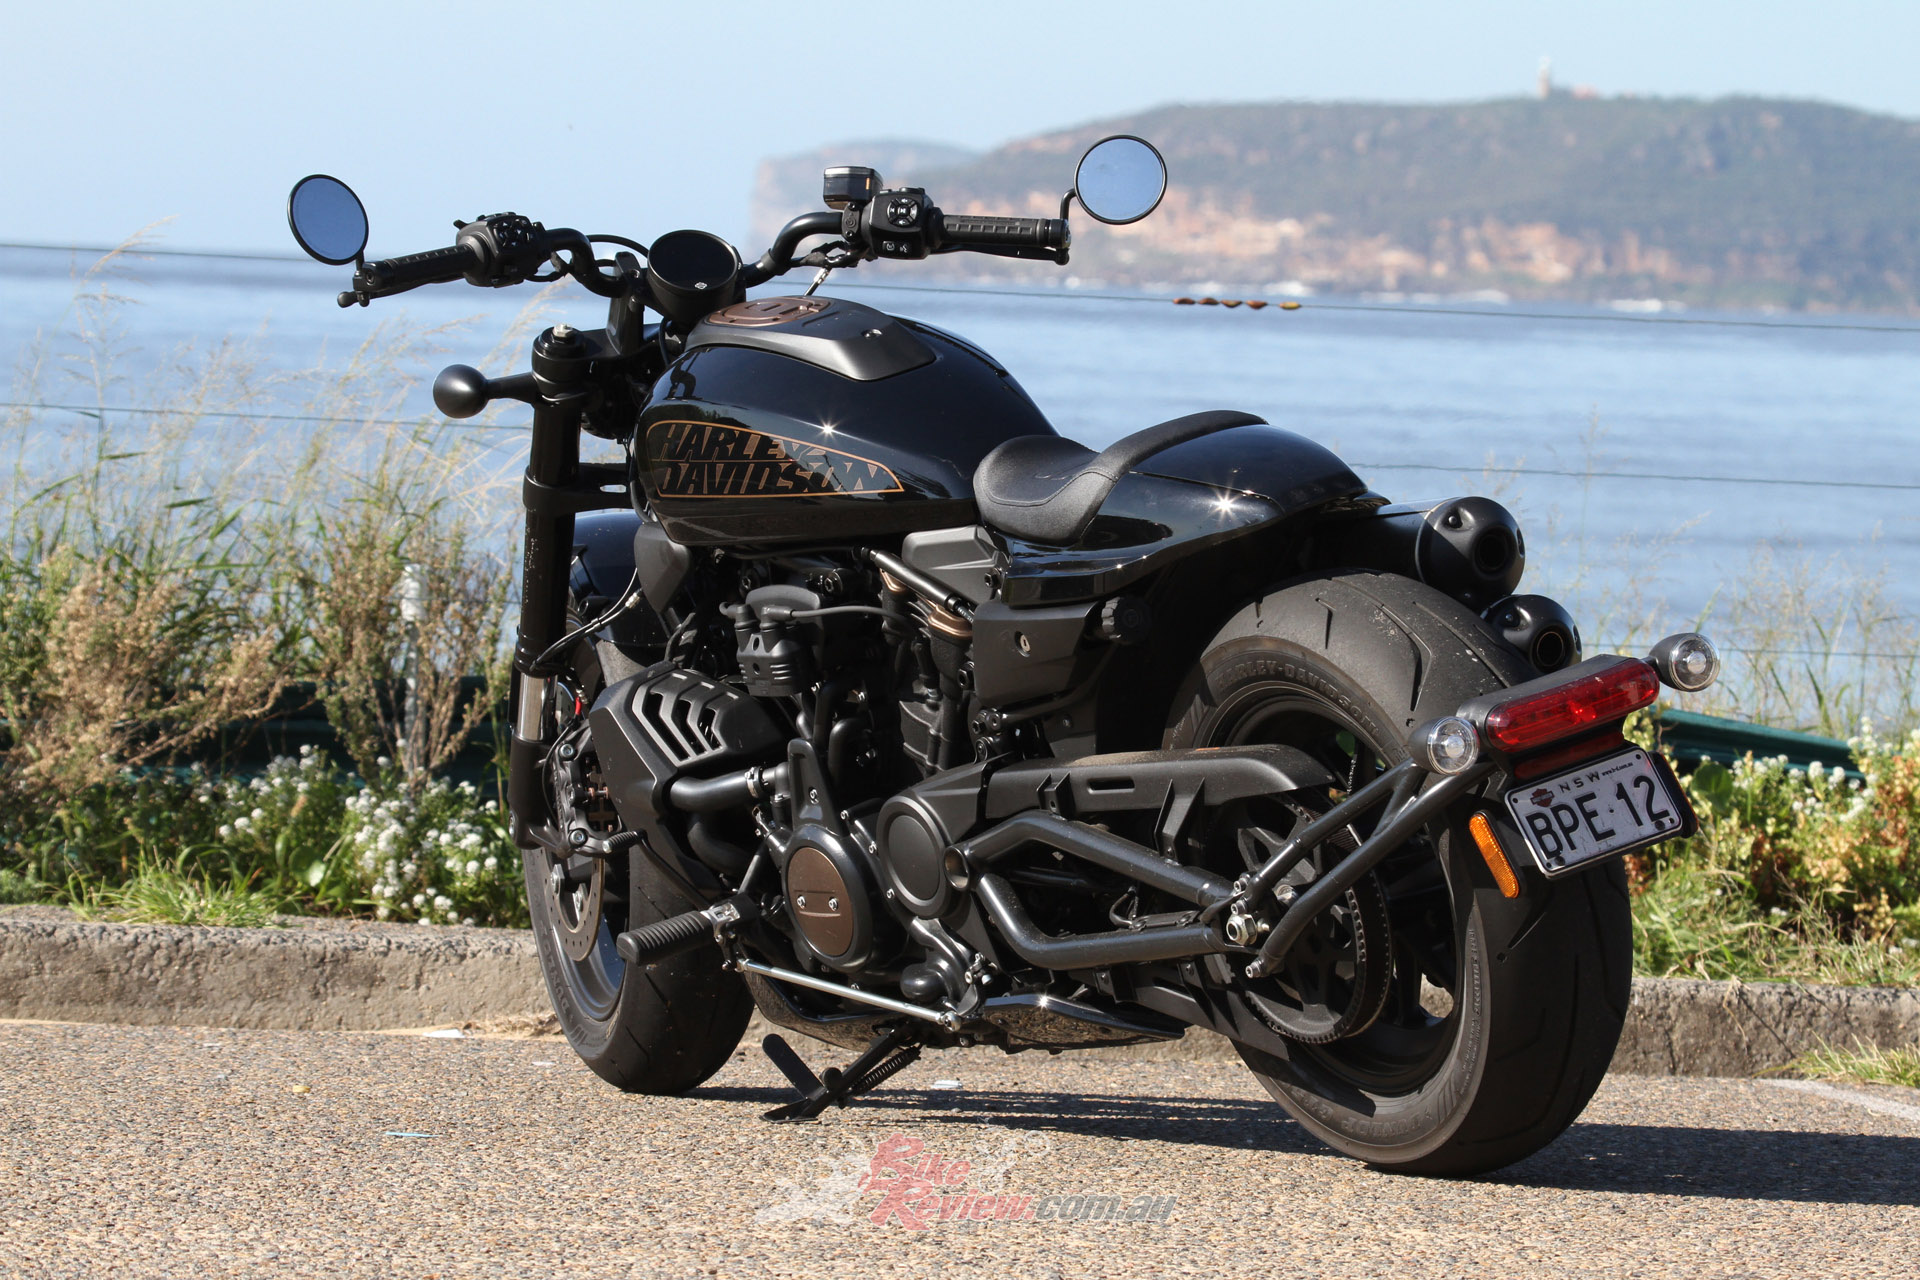 Harley-Davidson Revolution Max 1250 V-Twin, Liquid-Cooled Engine -  Motorcycle & Powersports News